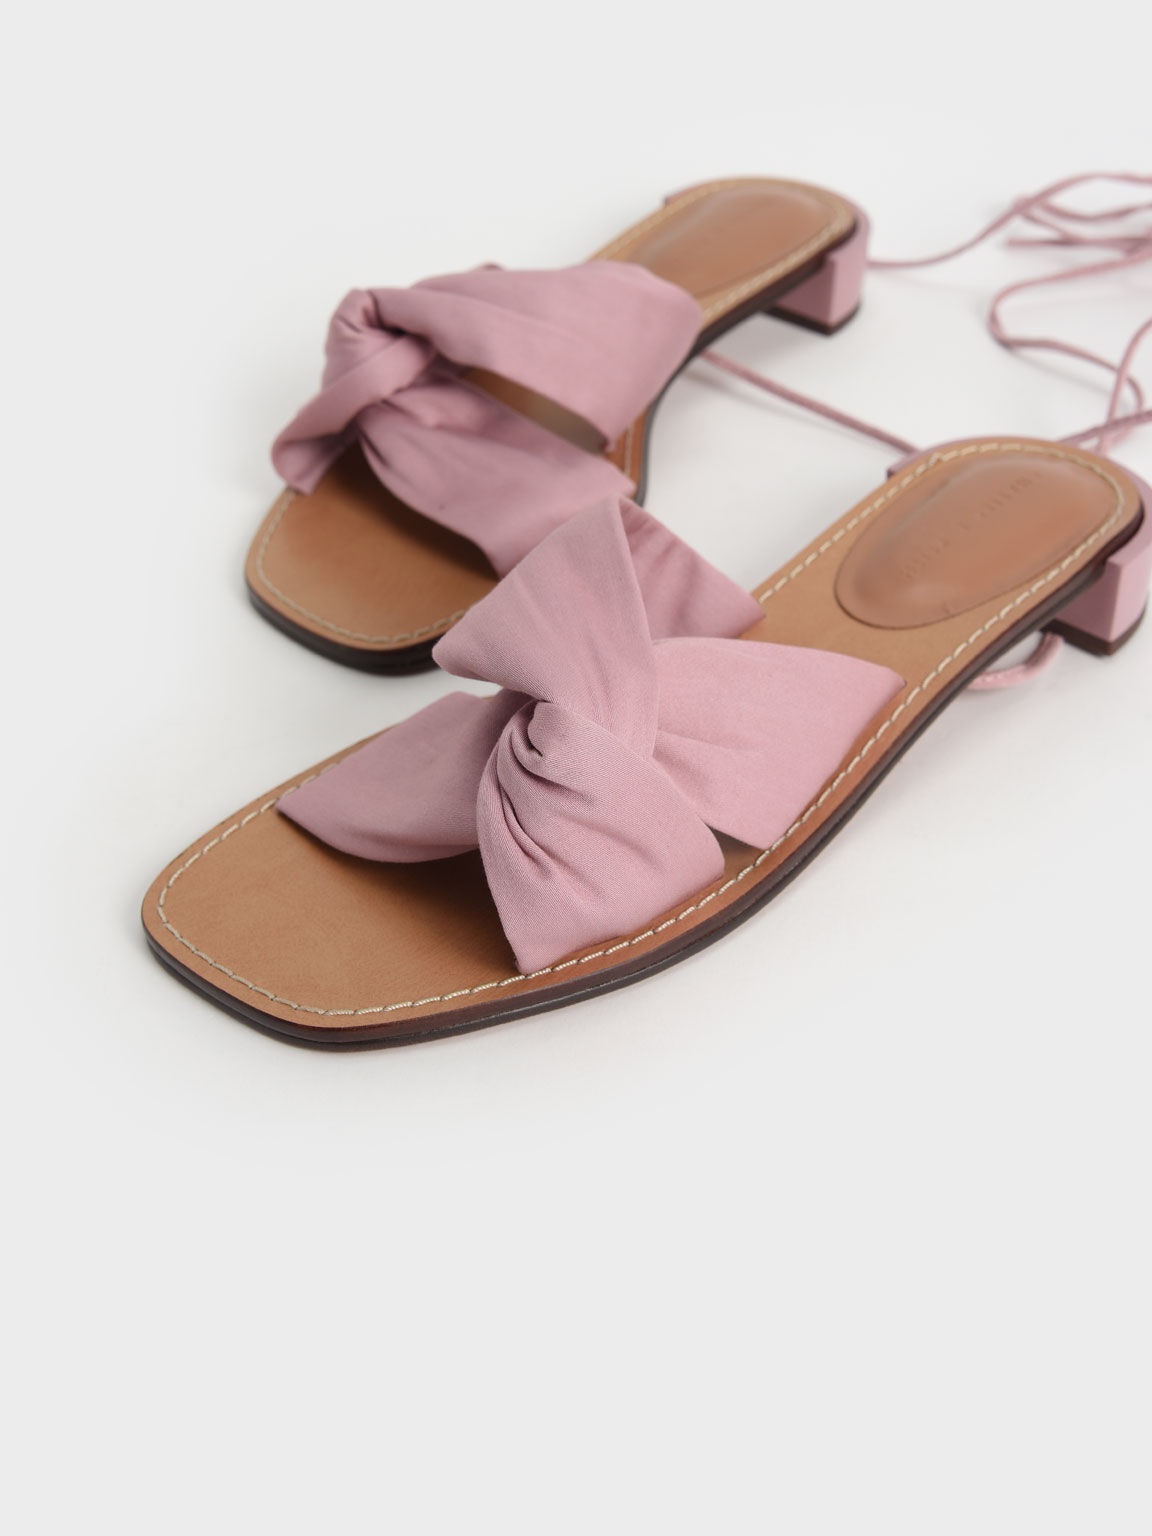 Knotted Tie-Around Sandals, Pink, hi-res